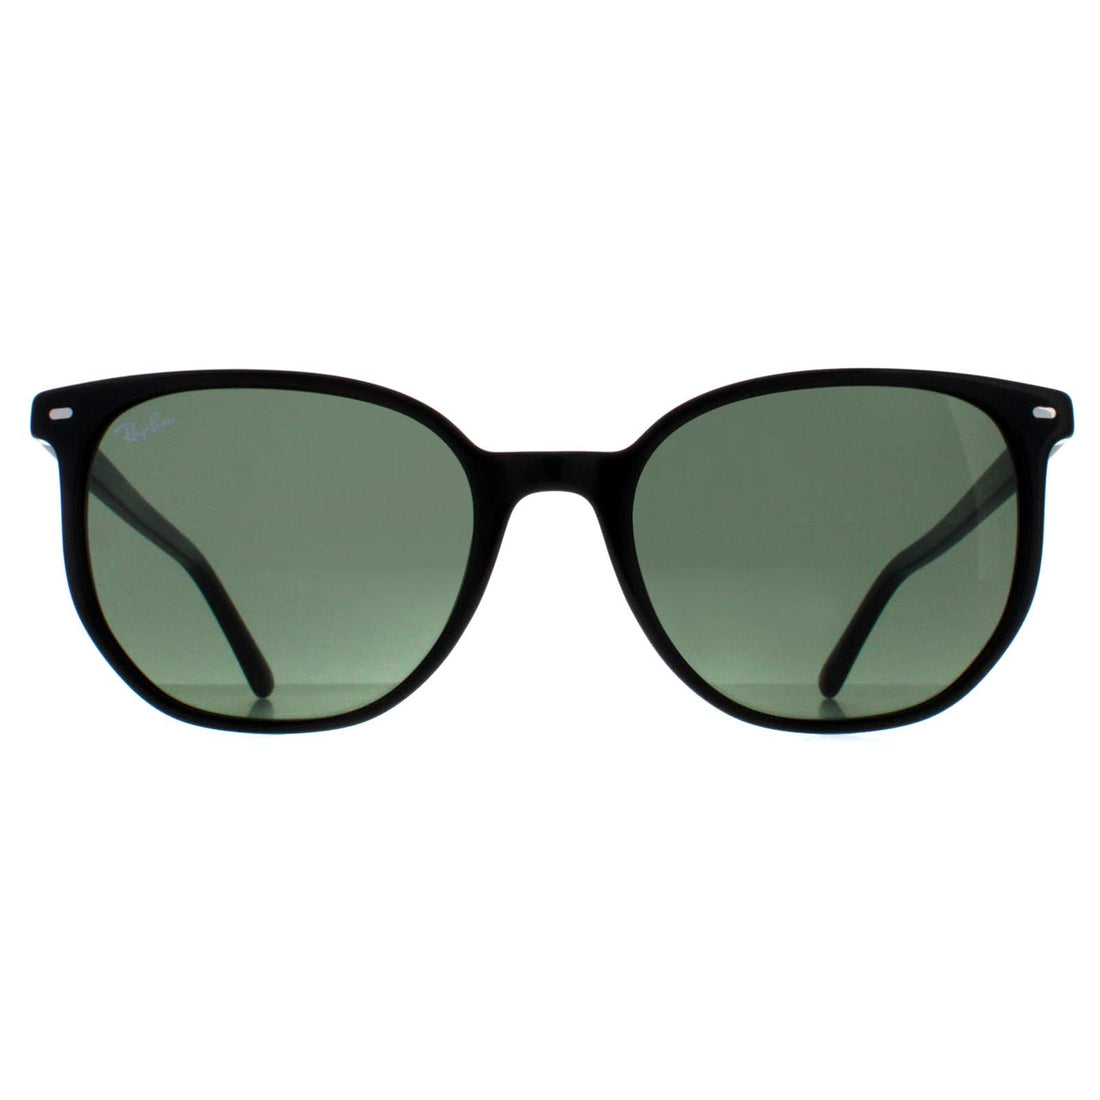 Ray-Ban RB2197 Elliot Sunglasses Polished Black G15 Green